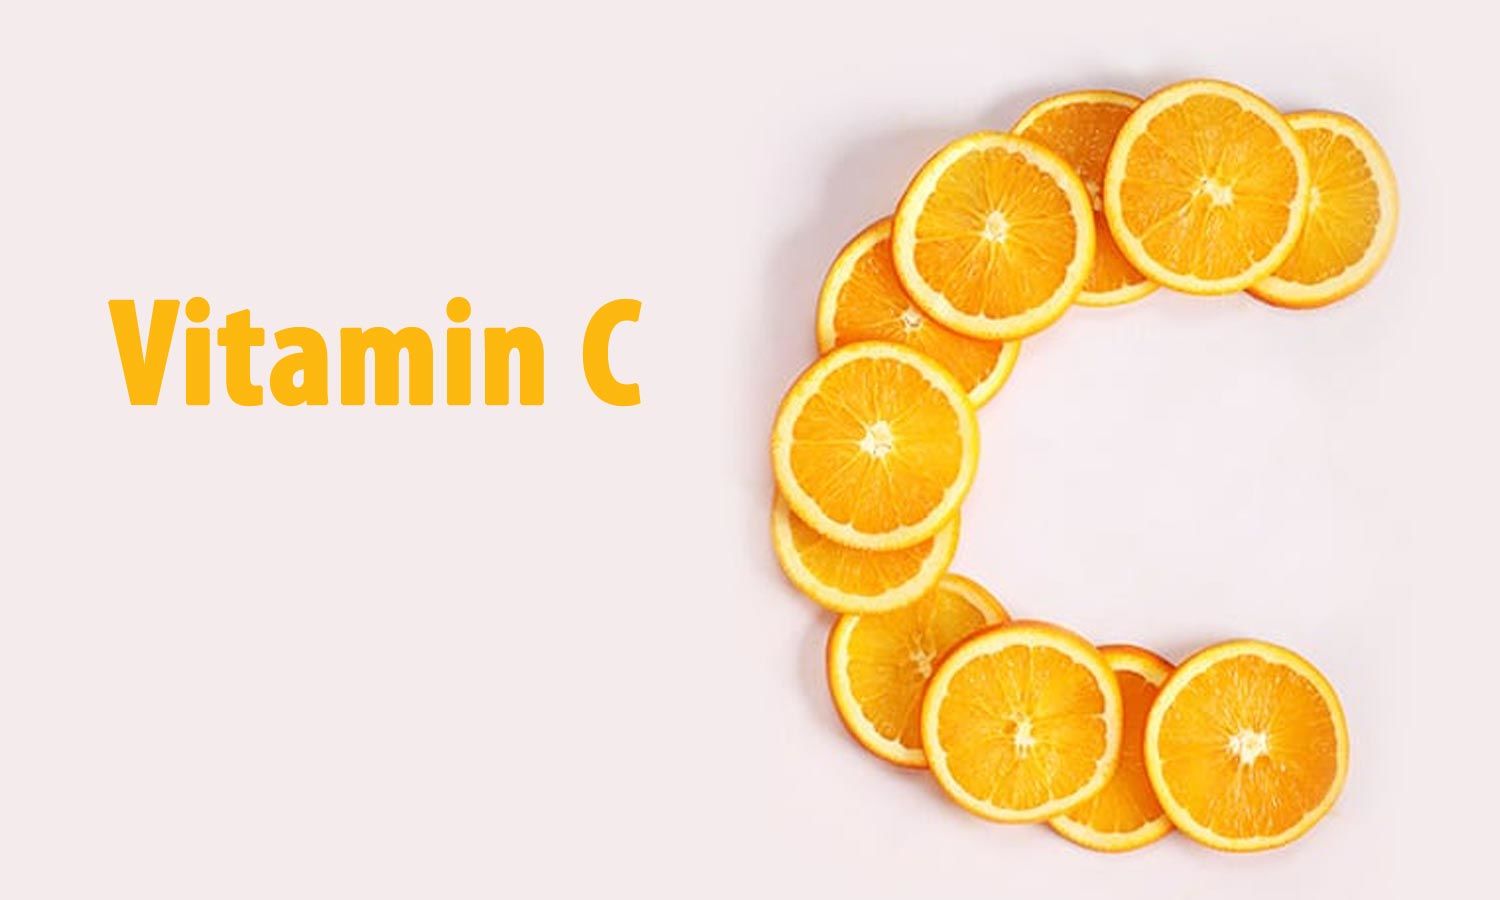 Why Vitamin C is beauty's new buzzword